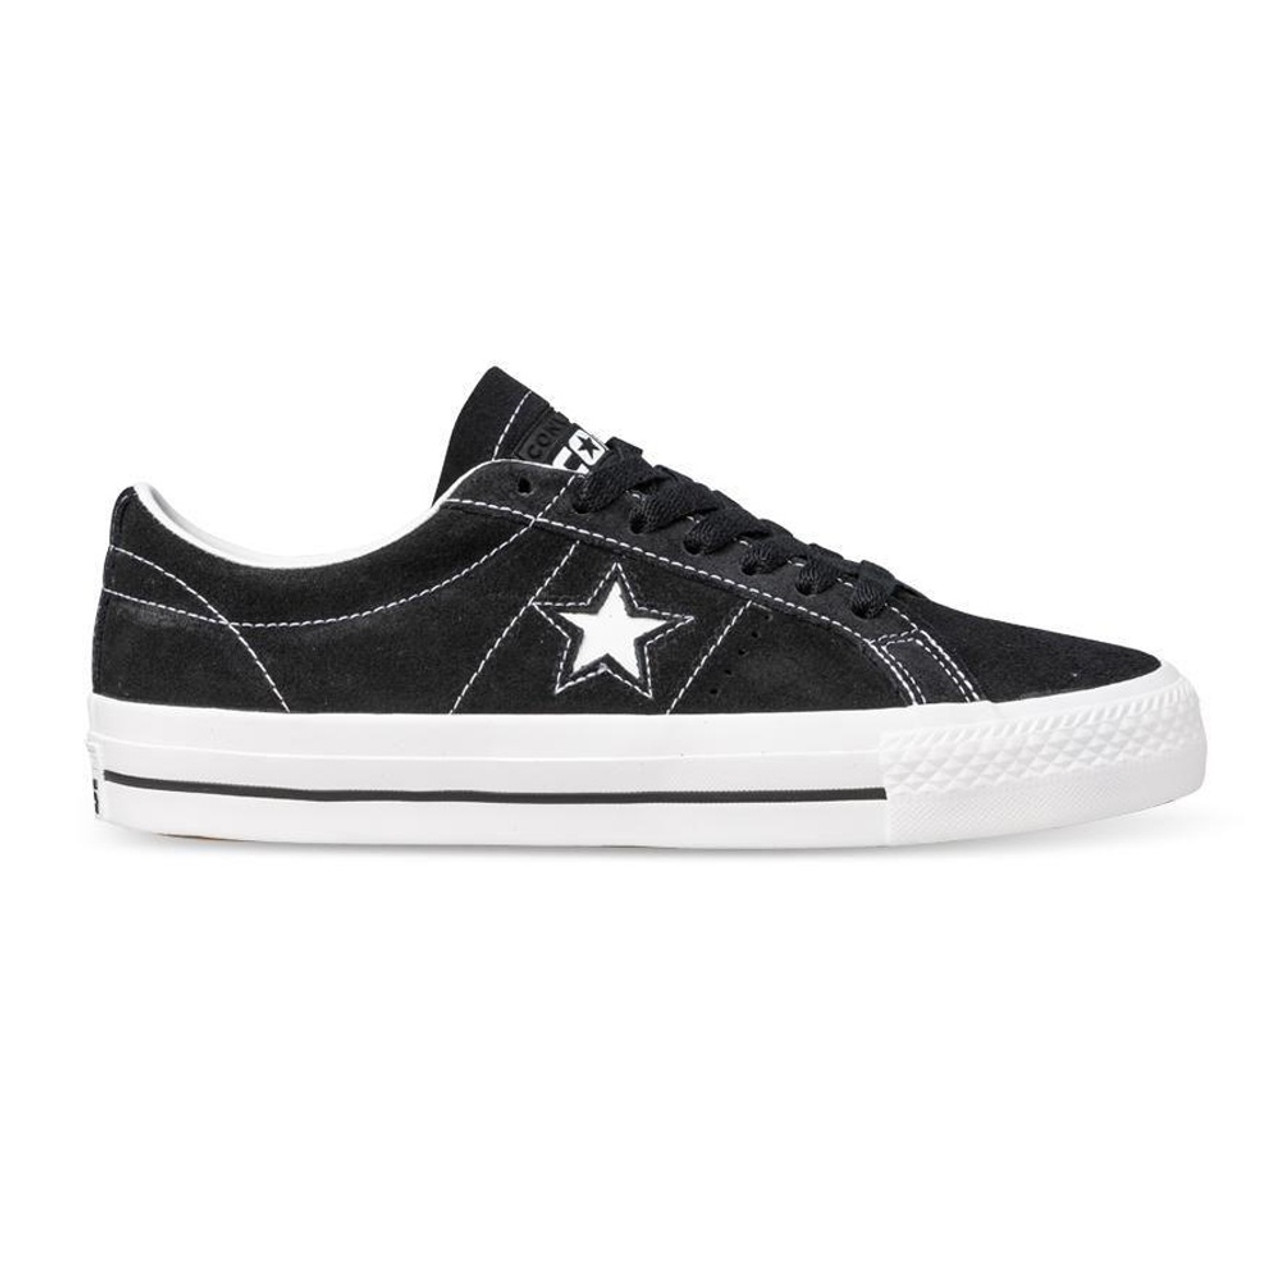 CONVERSE One Star Pro Shoes Black/Black/White